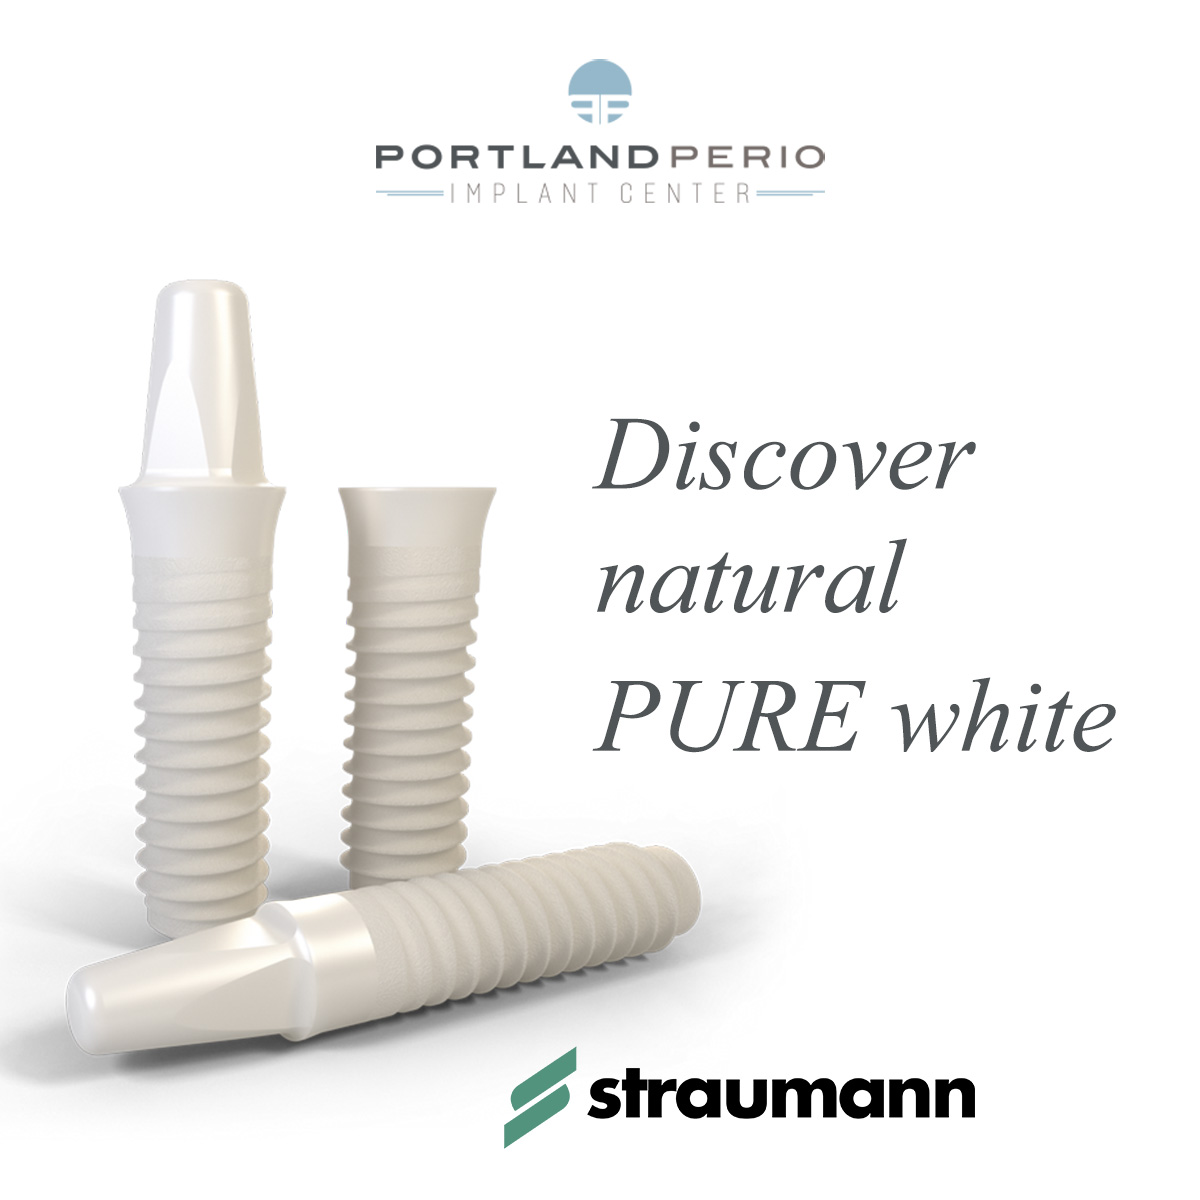 Straumann Ceramic Implants? - Dr. Kamran Haghighat of Portland Perio Implant Center